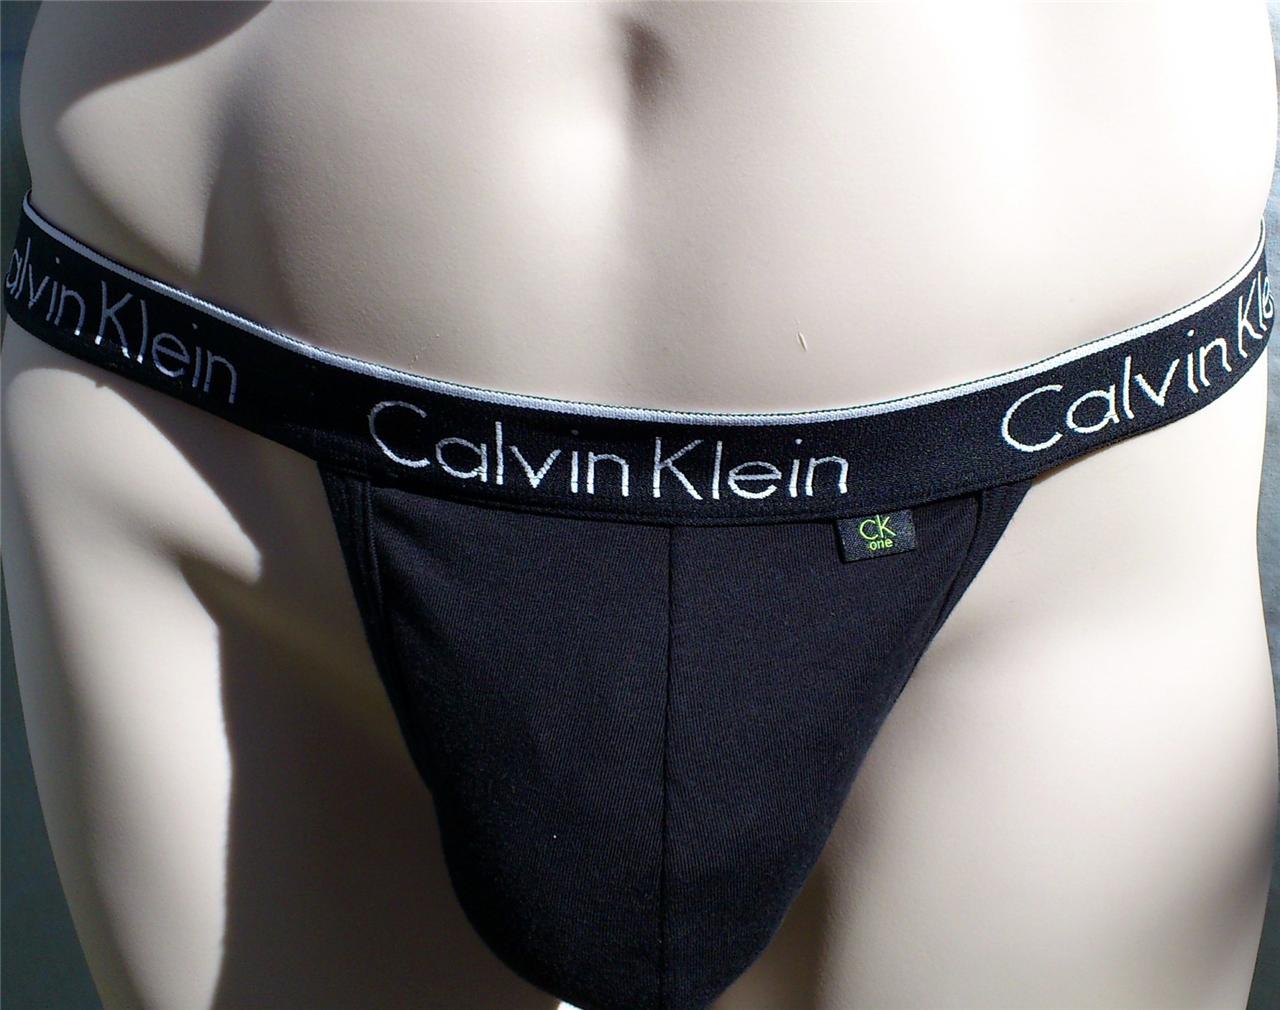 New Ck One Thong Black Calvin Klein Boxed Mens String Tanga Underwear